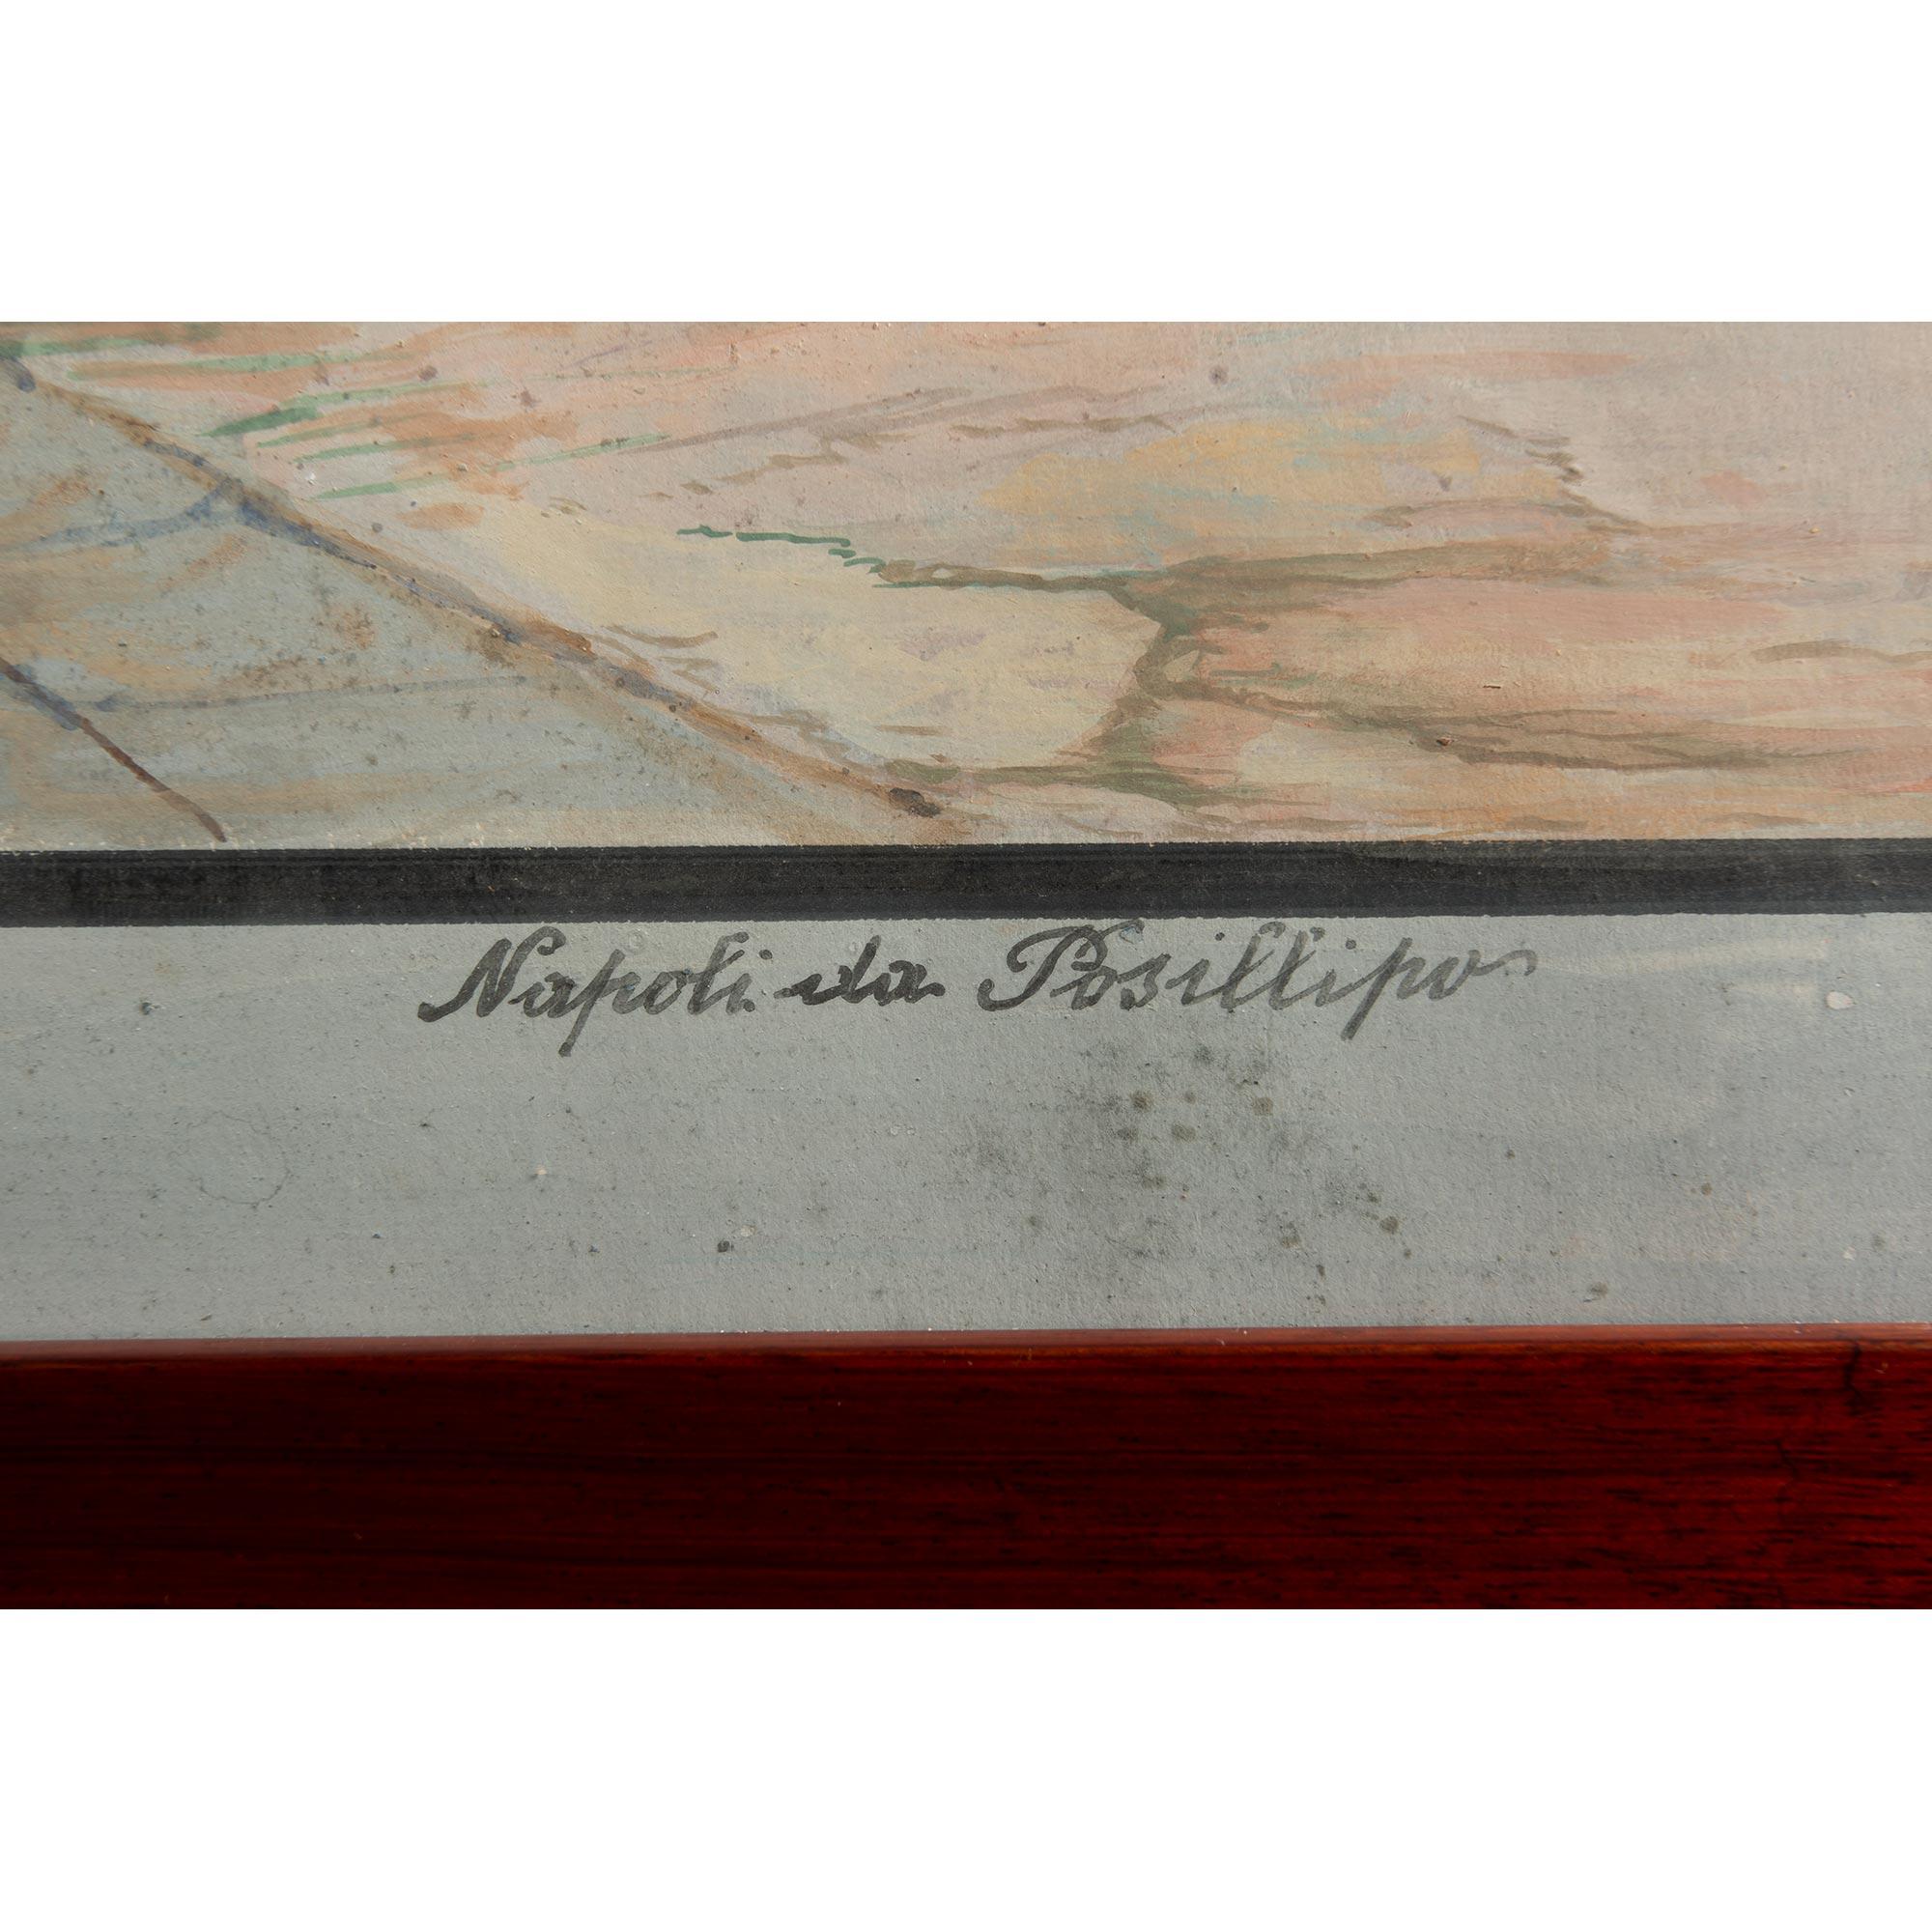 Pair of Italian 18th Century Neapolitan Gouaches in 19th Century Mahogany Frame For Sale 8